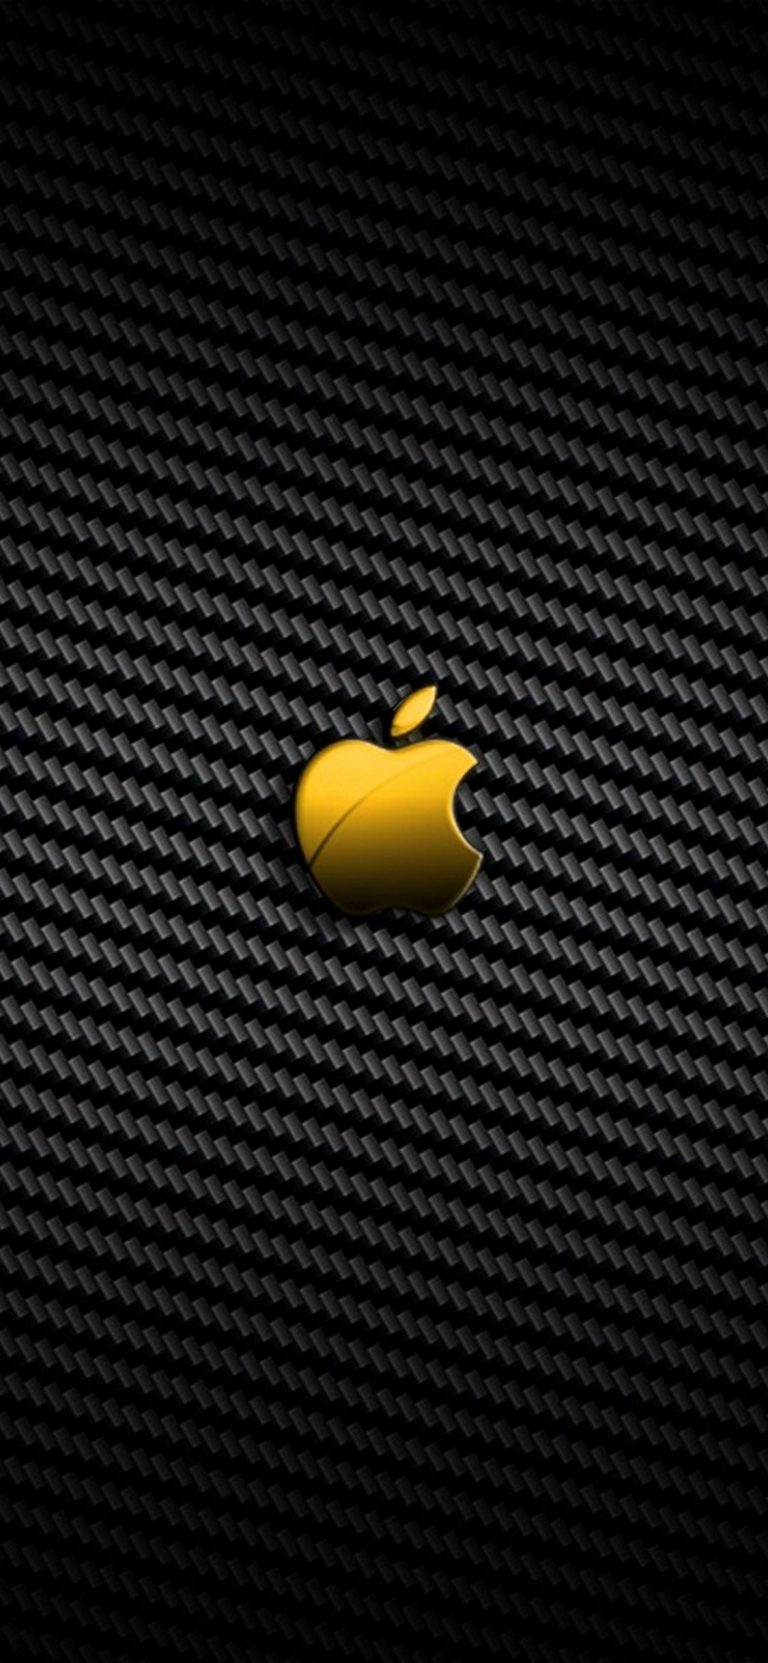 Apple Logo iPhone Wallpaper - 28